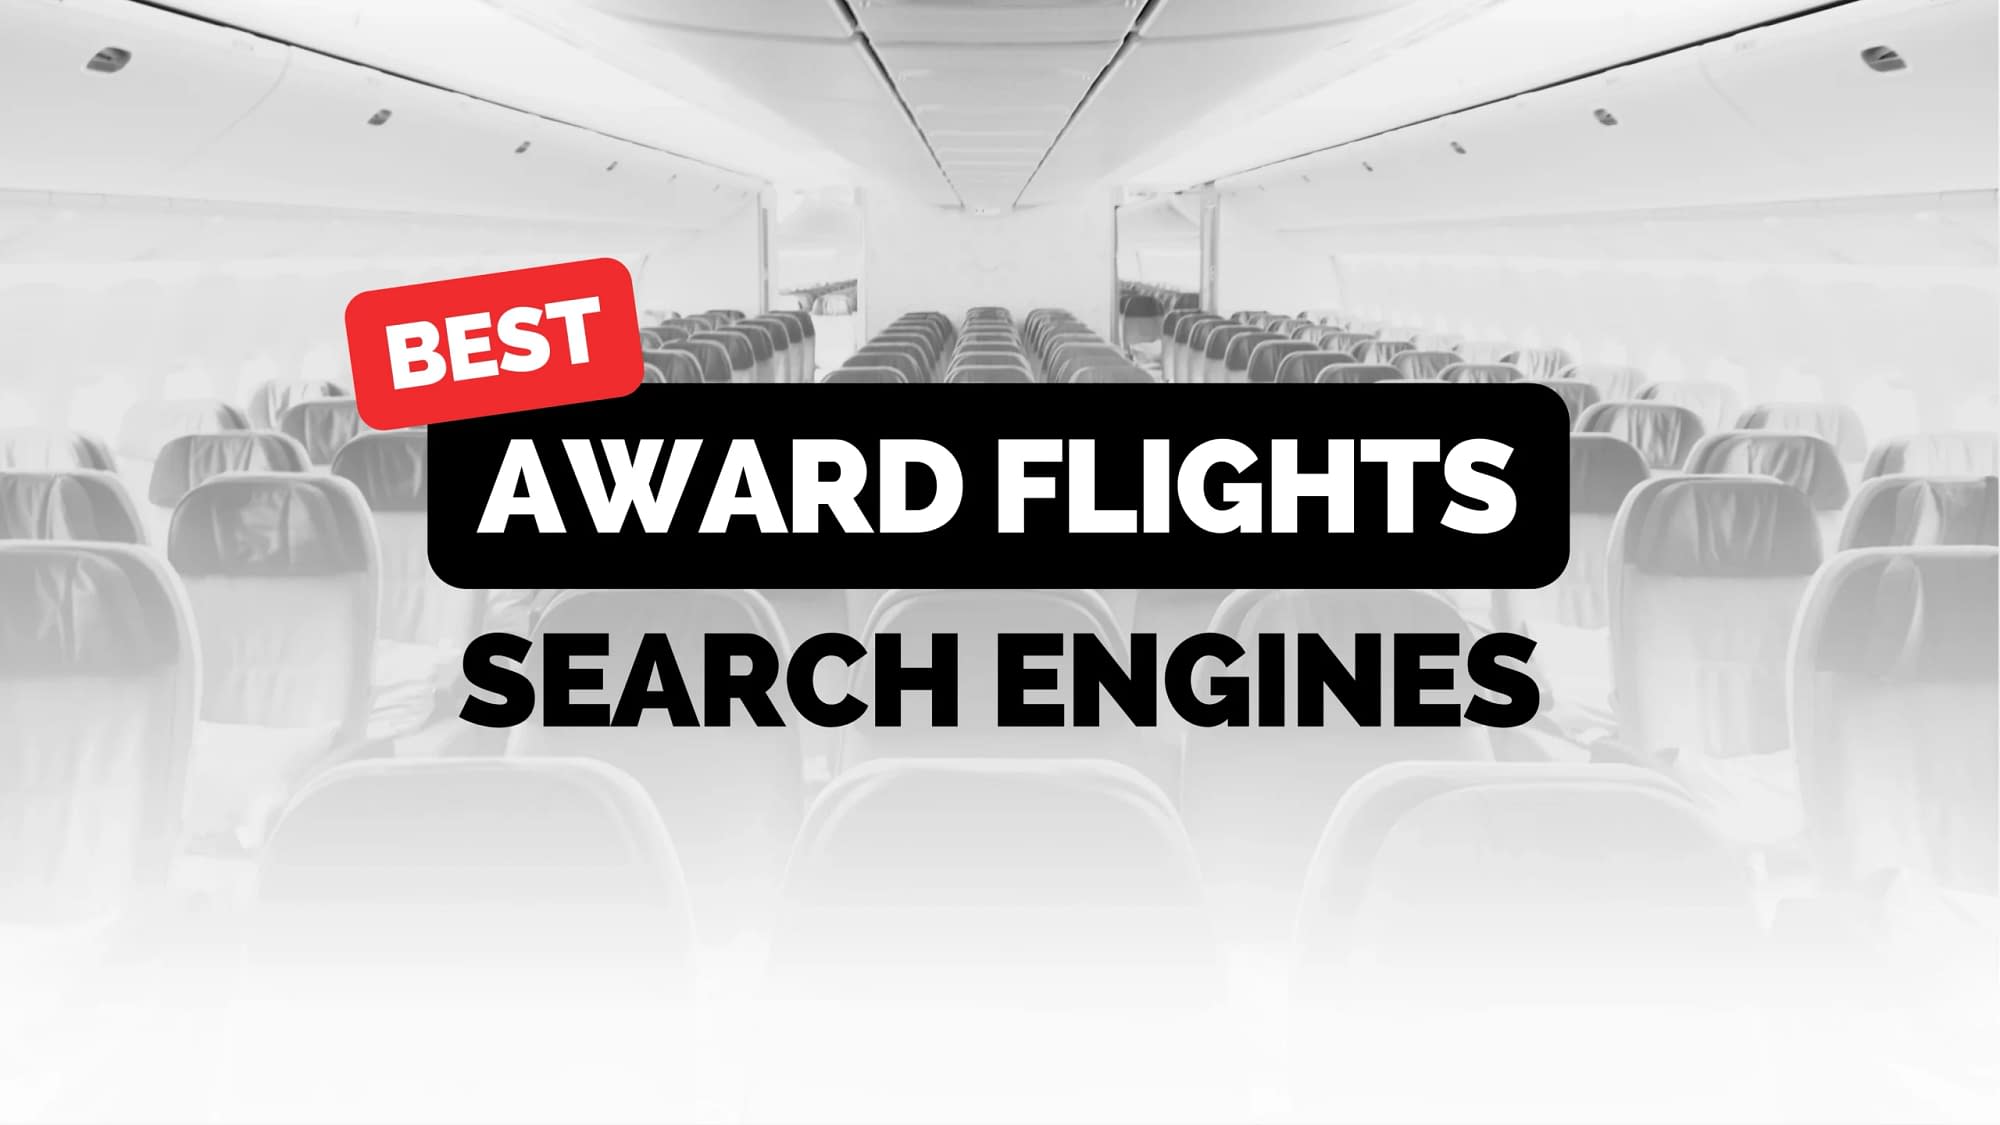 Best Award Flight Search Engines in 2023